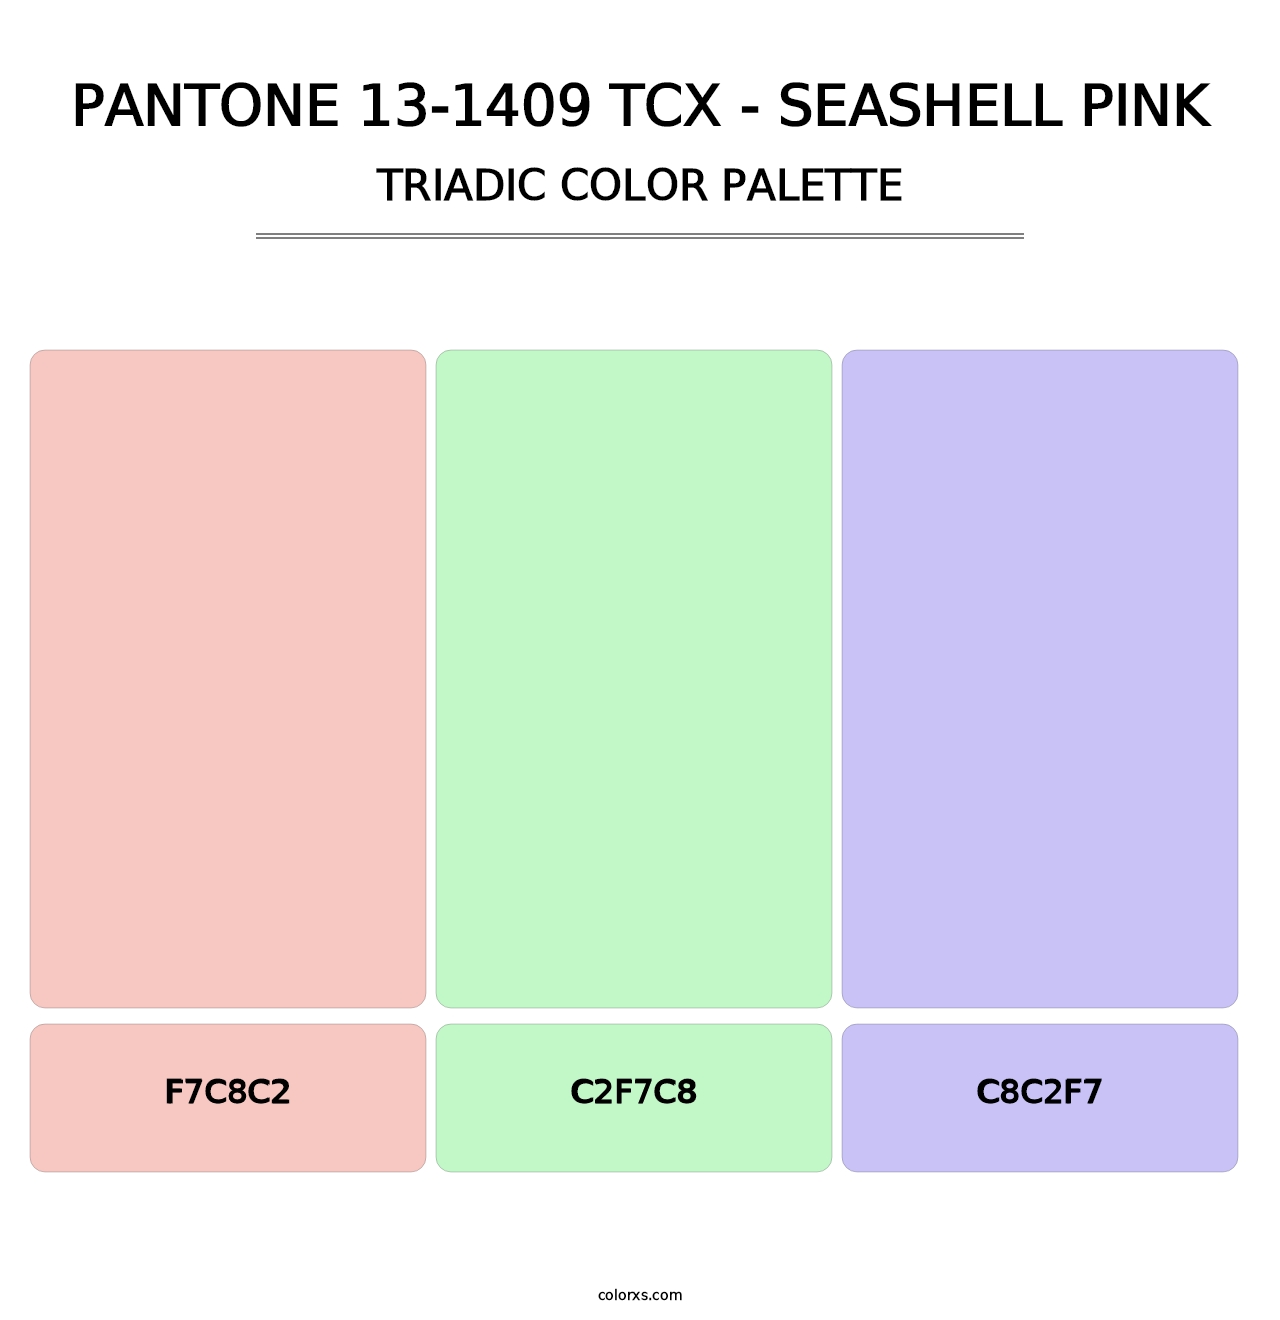 PANTONE 13-1409 TCX - Seashell Pink - Triadic Color Palette